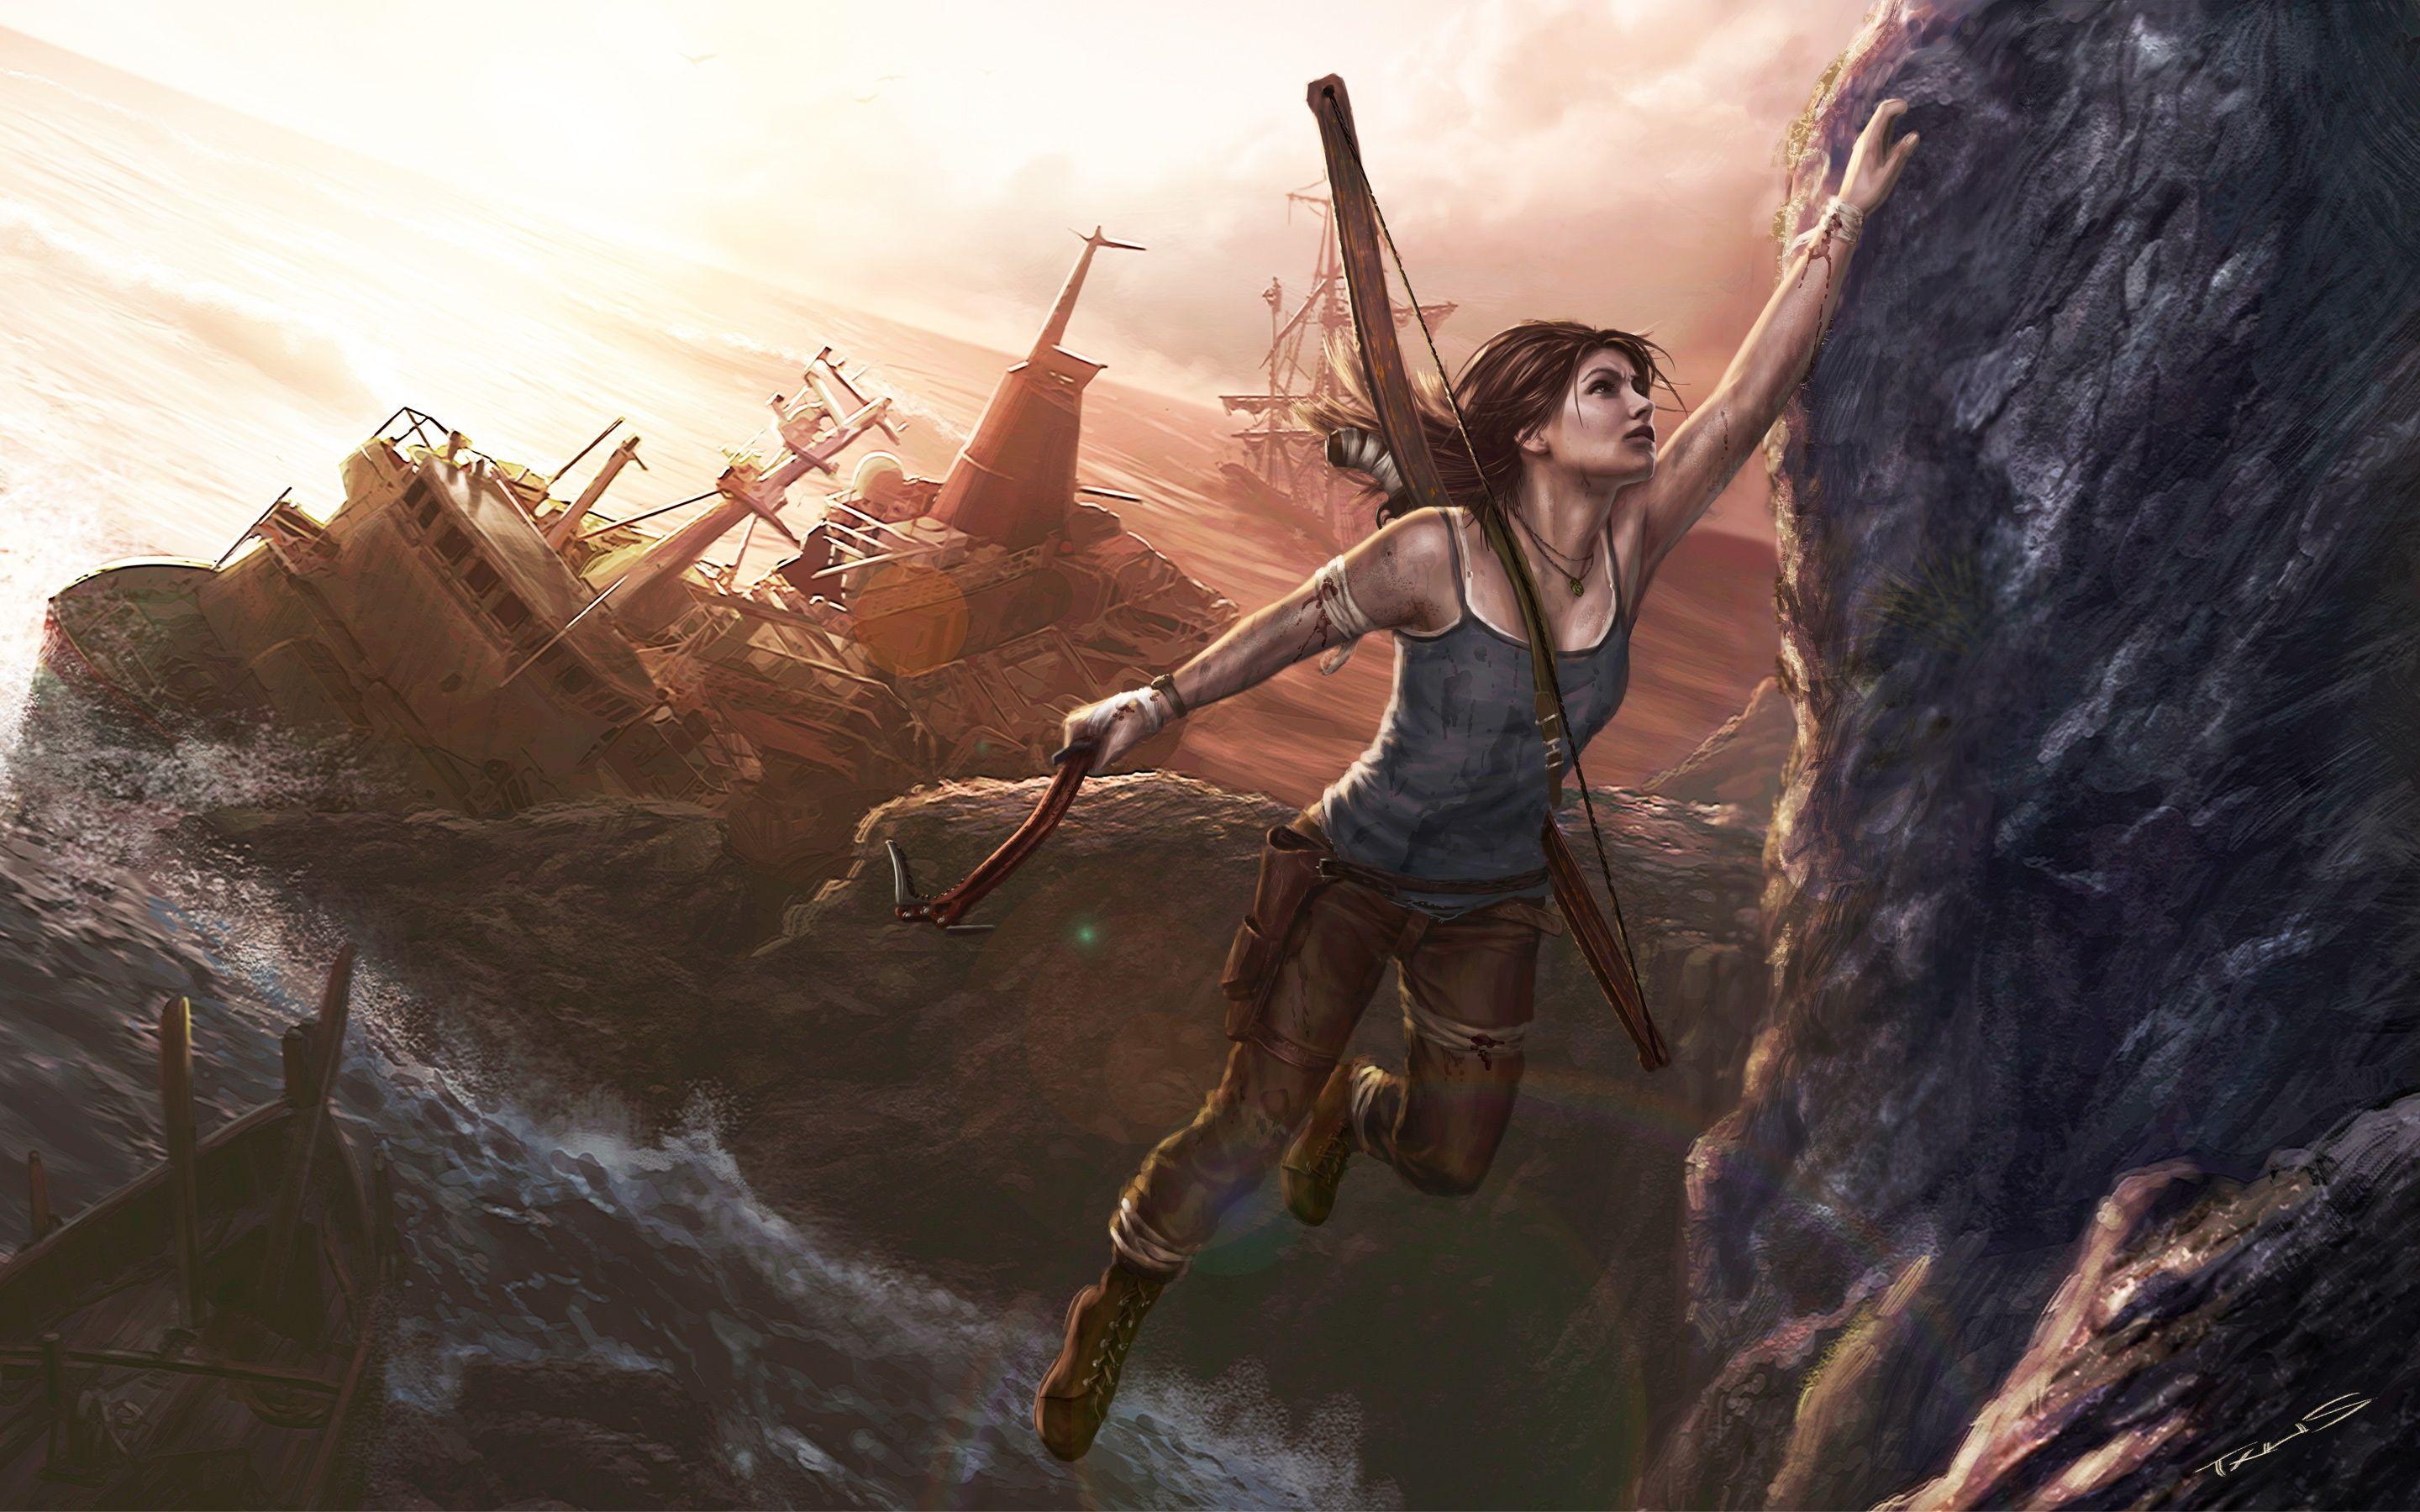 Lara Croft 2013 Concept Art HD Wallpaper, Background Image